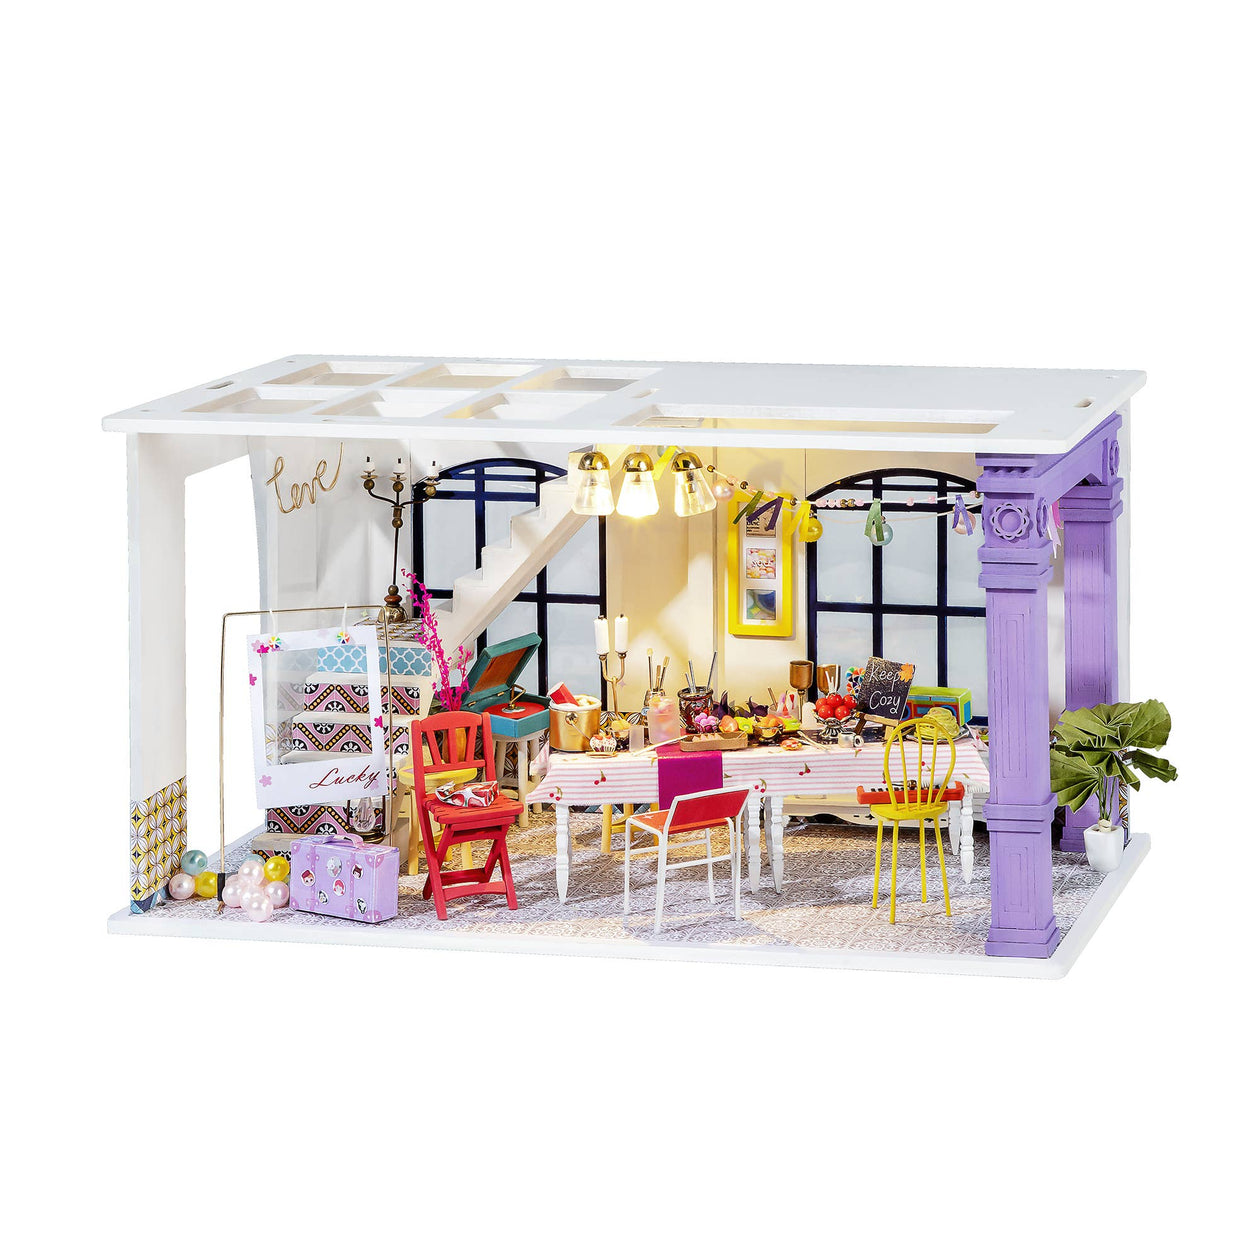 DIY Miniature House Kit: Party Time